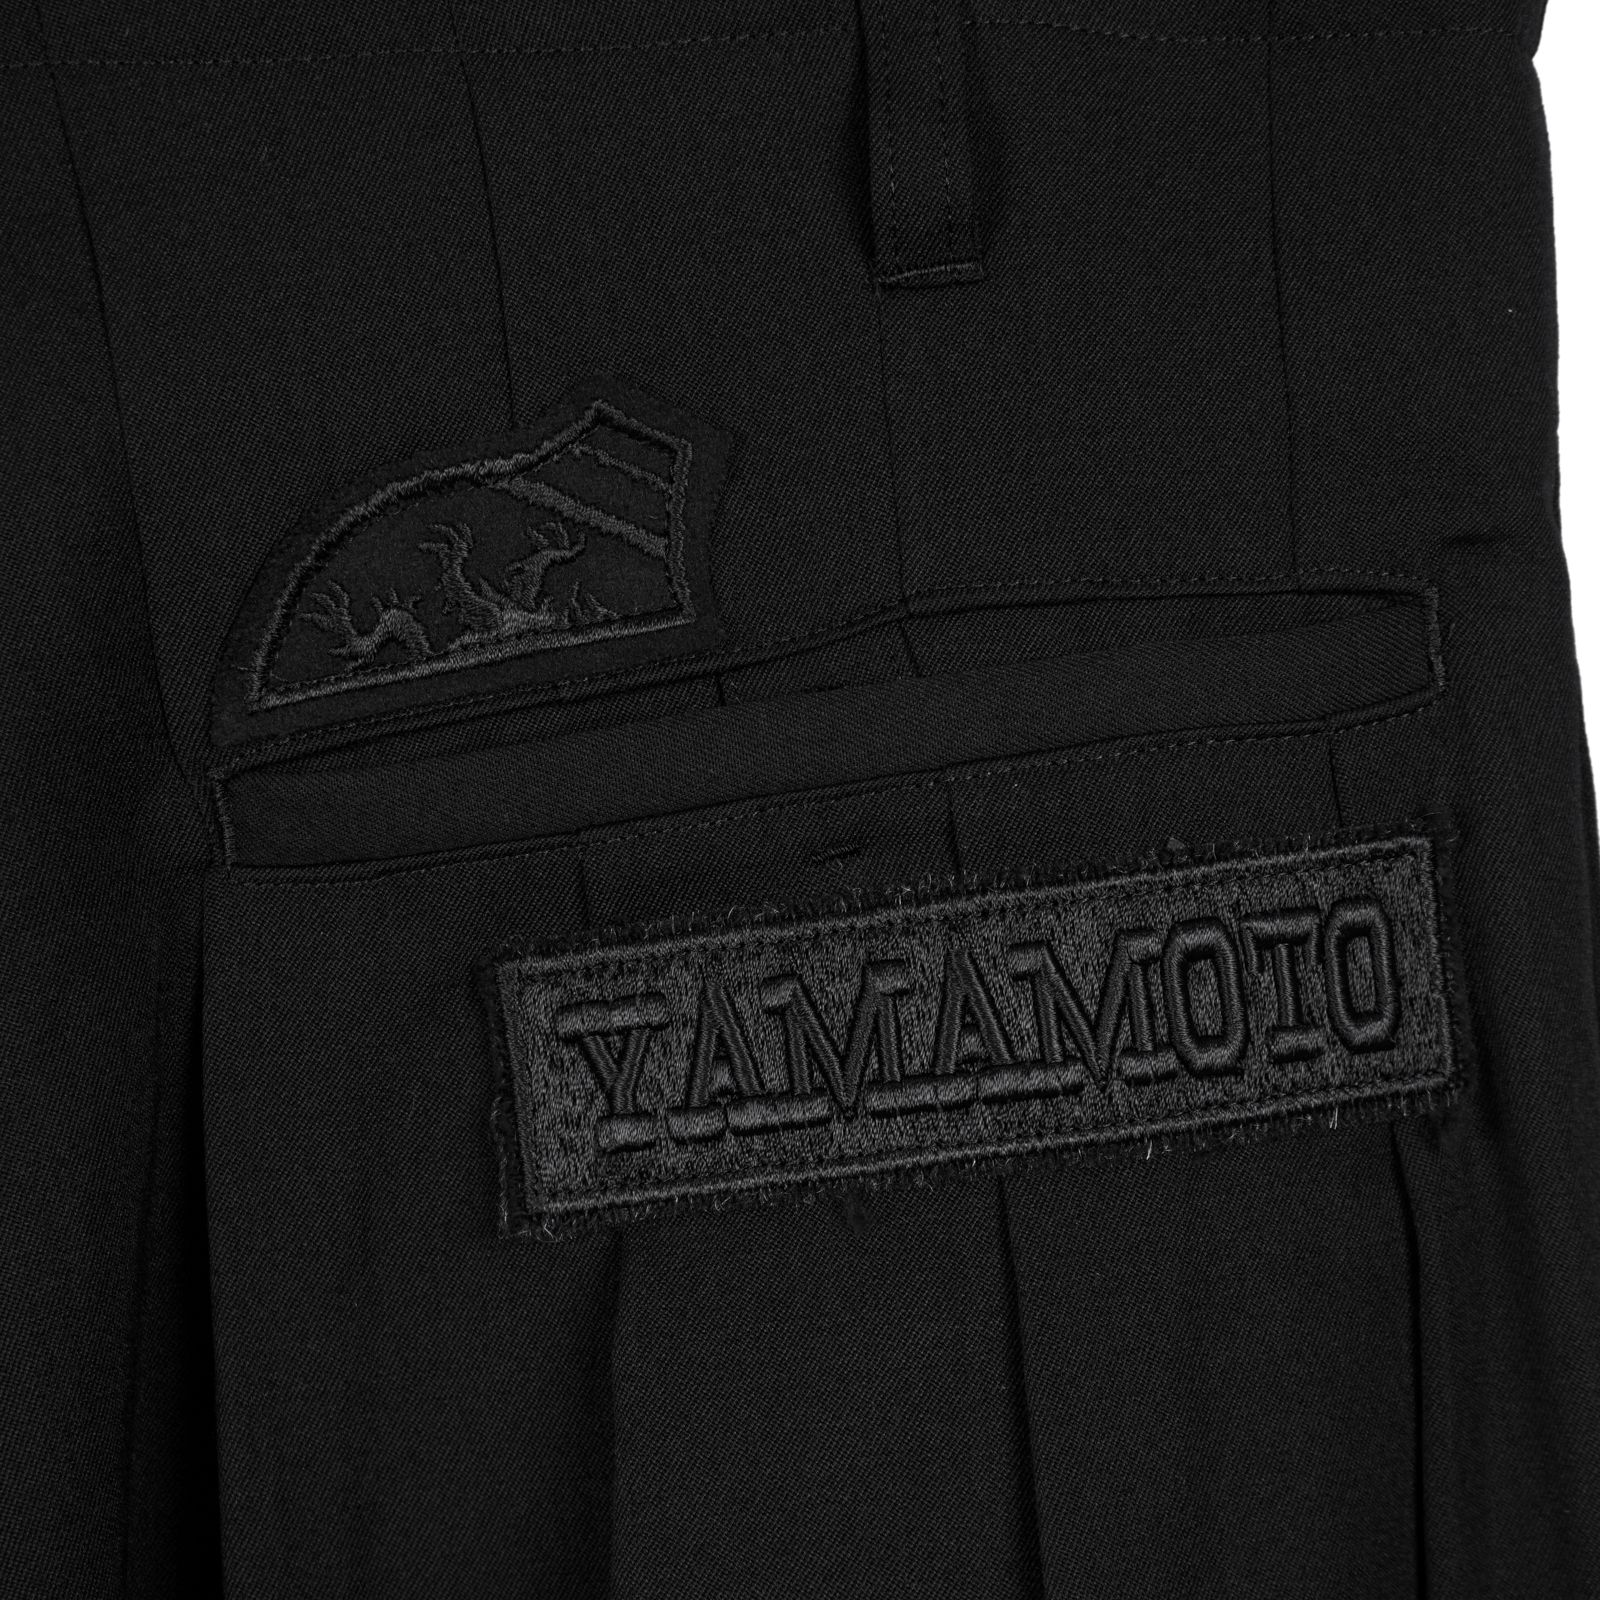 yohji yamamoto - Yohji Yamamoto [HR-P17-100 / バルーンパンツ